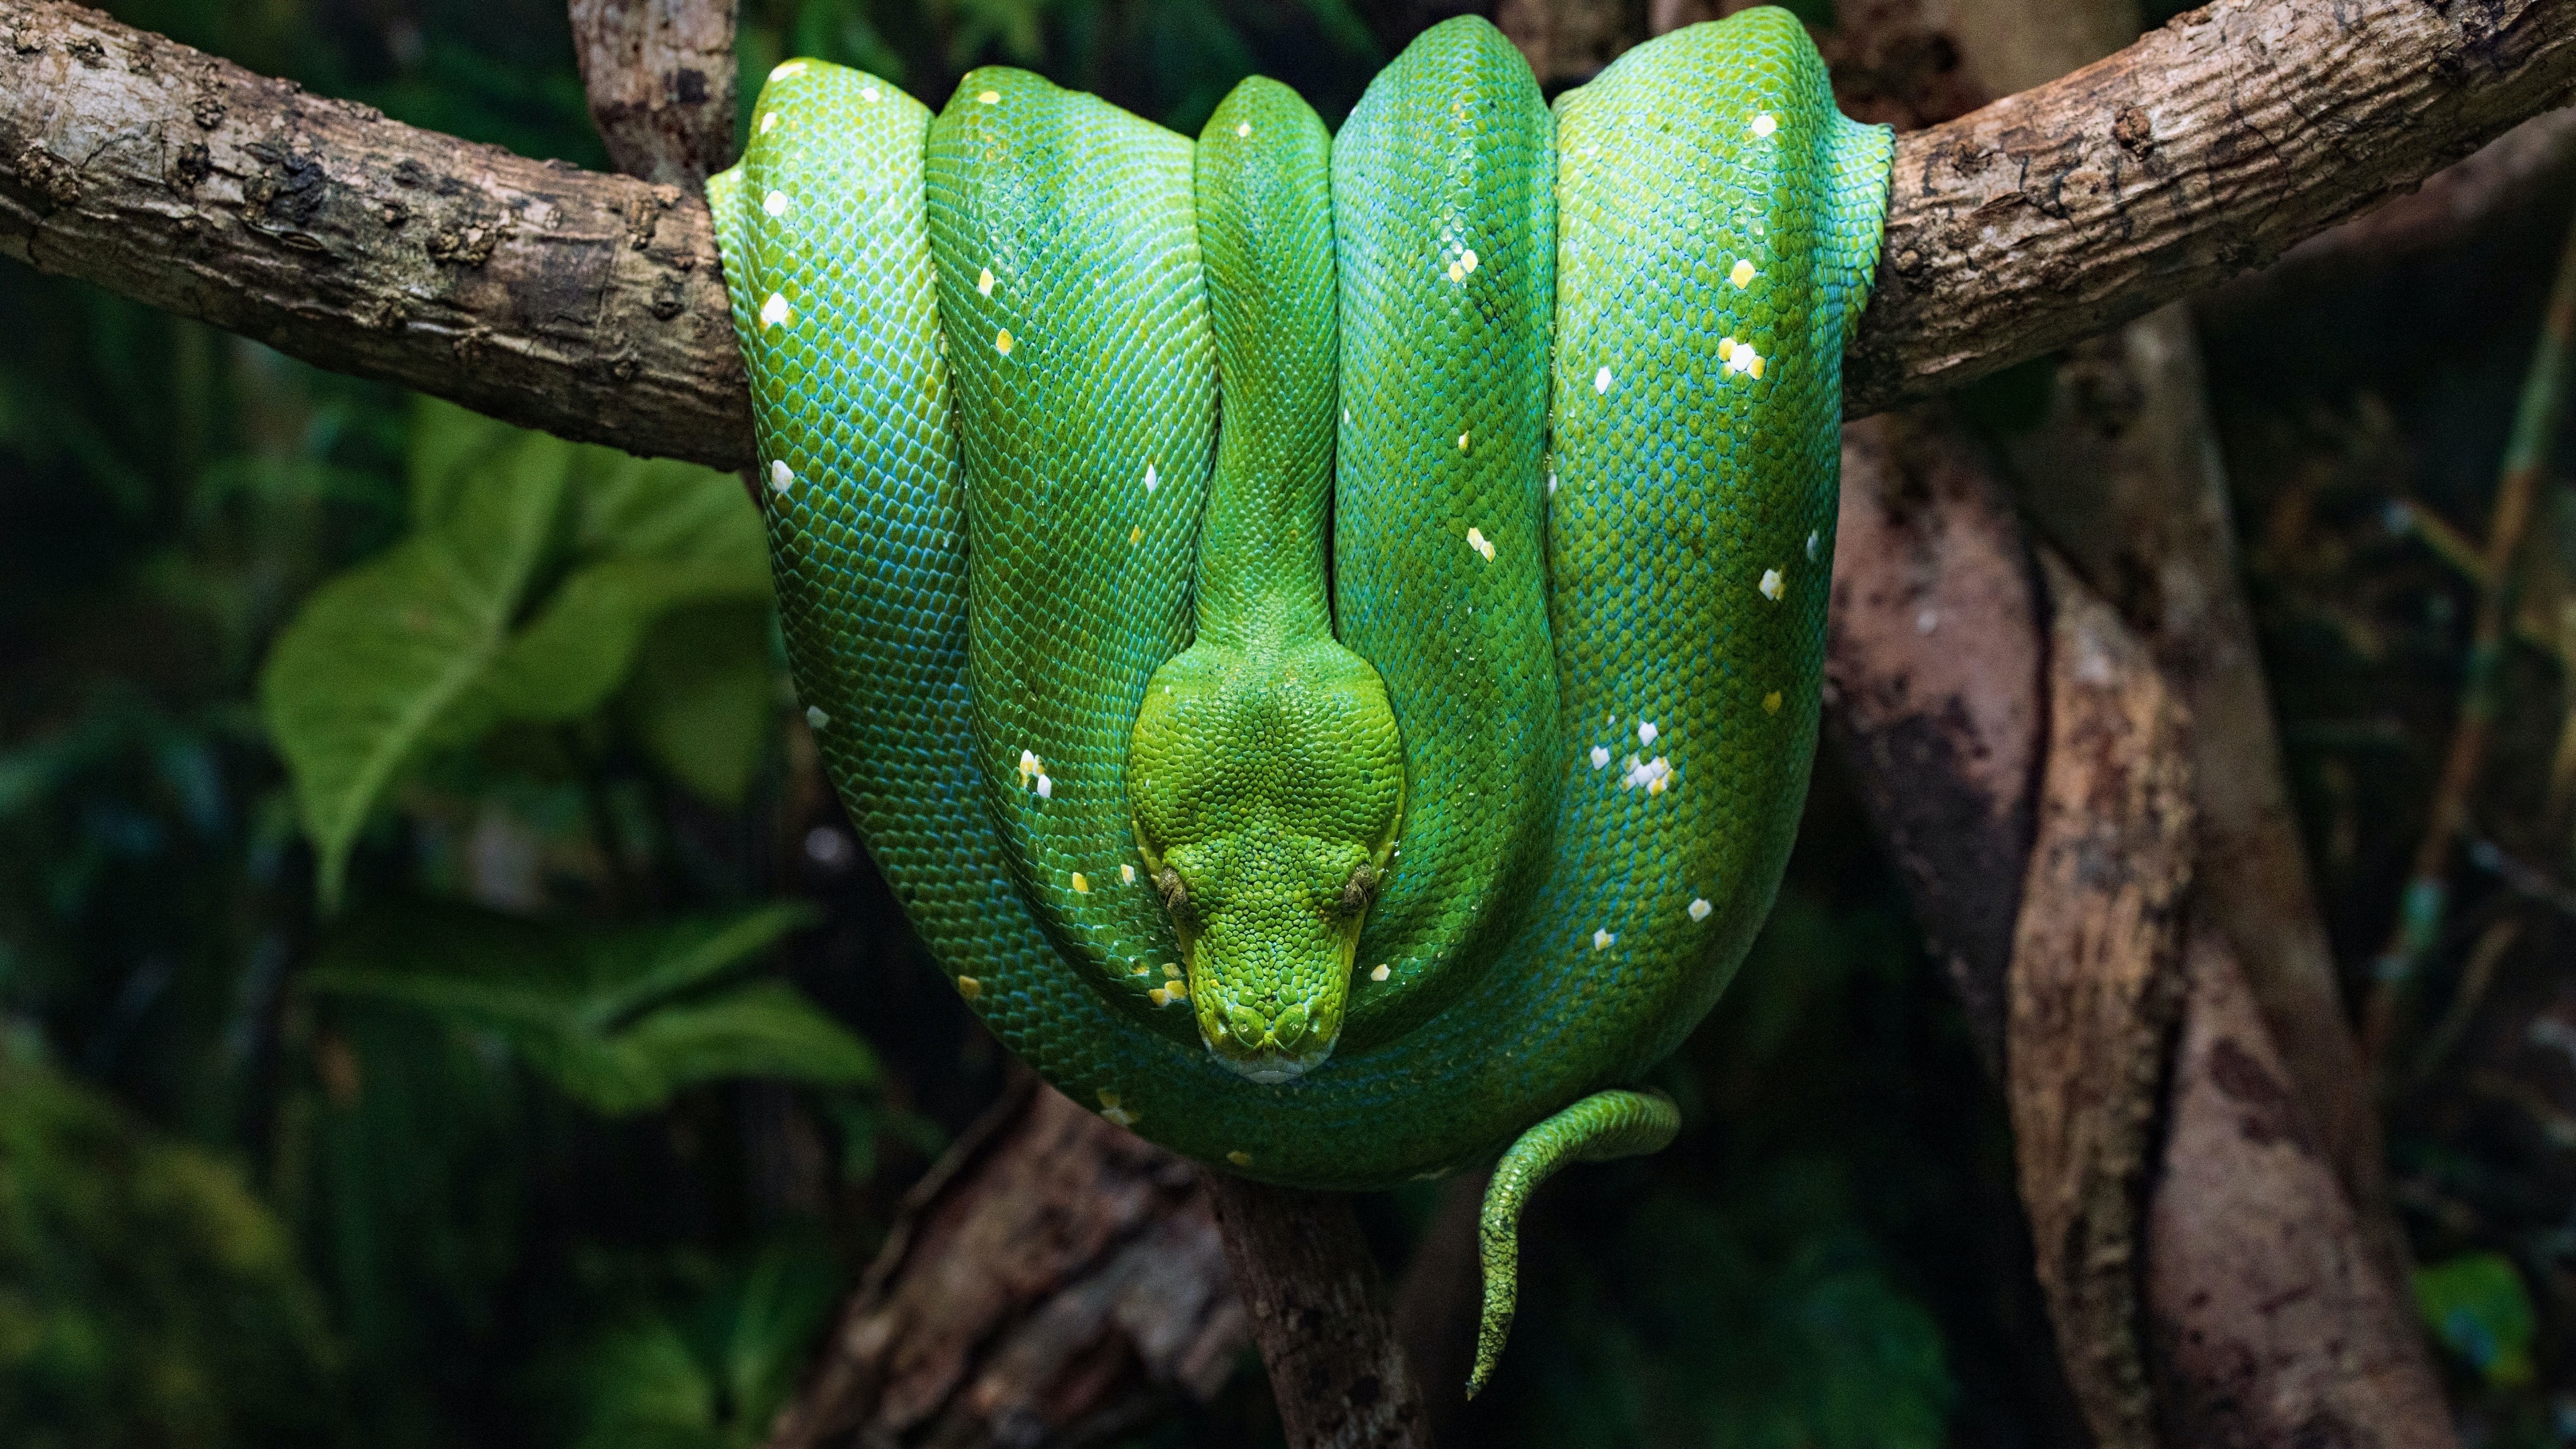 Green python wallpaper, 4K resolution, Tree branch reptile, Coiled snake, 3840x2160 4K Desktop